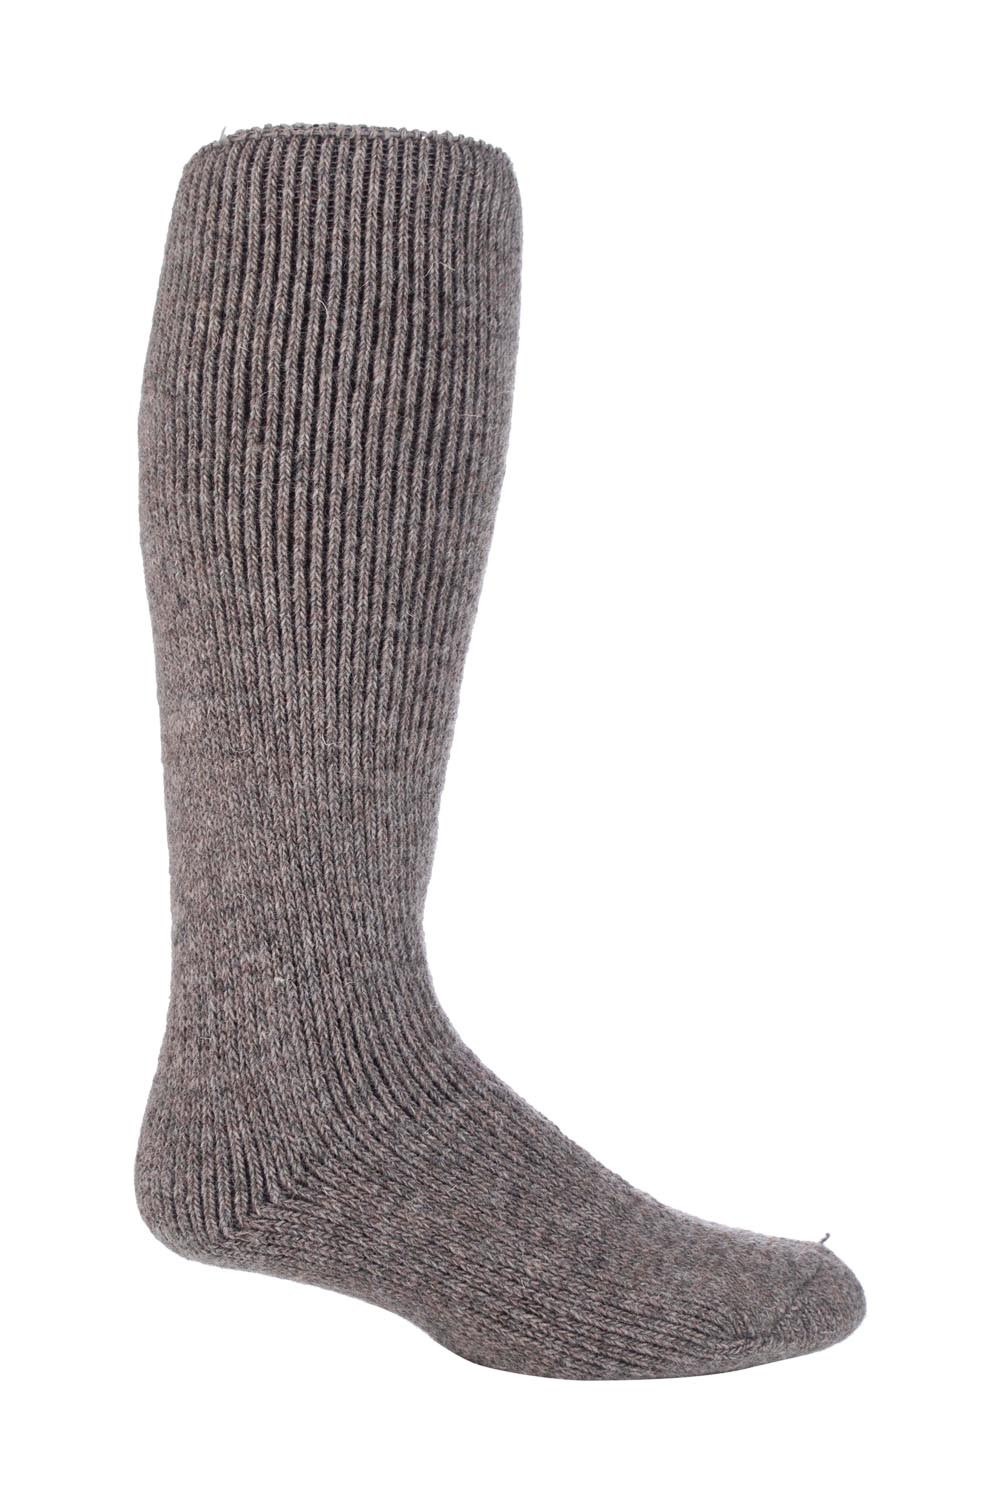 Mens Extra Long Thermal Wool Socks